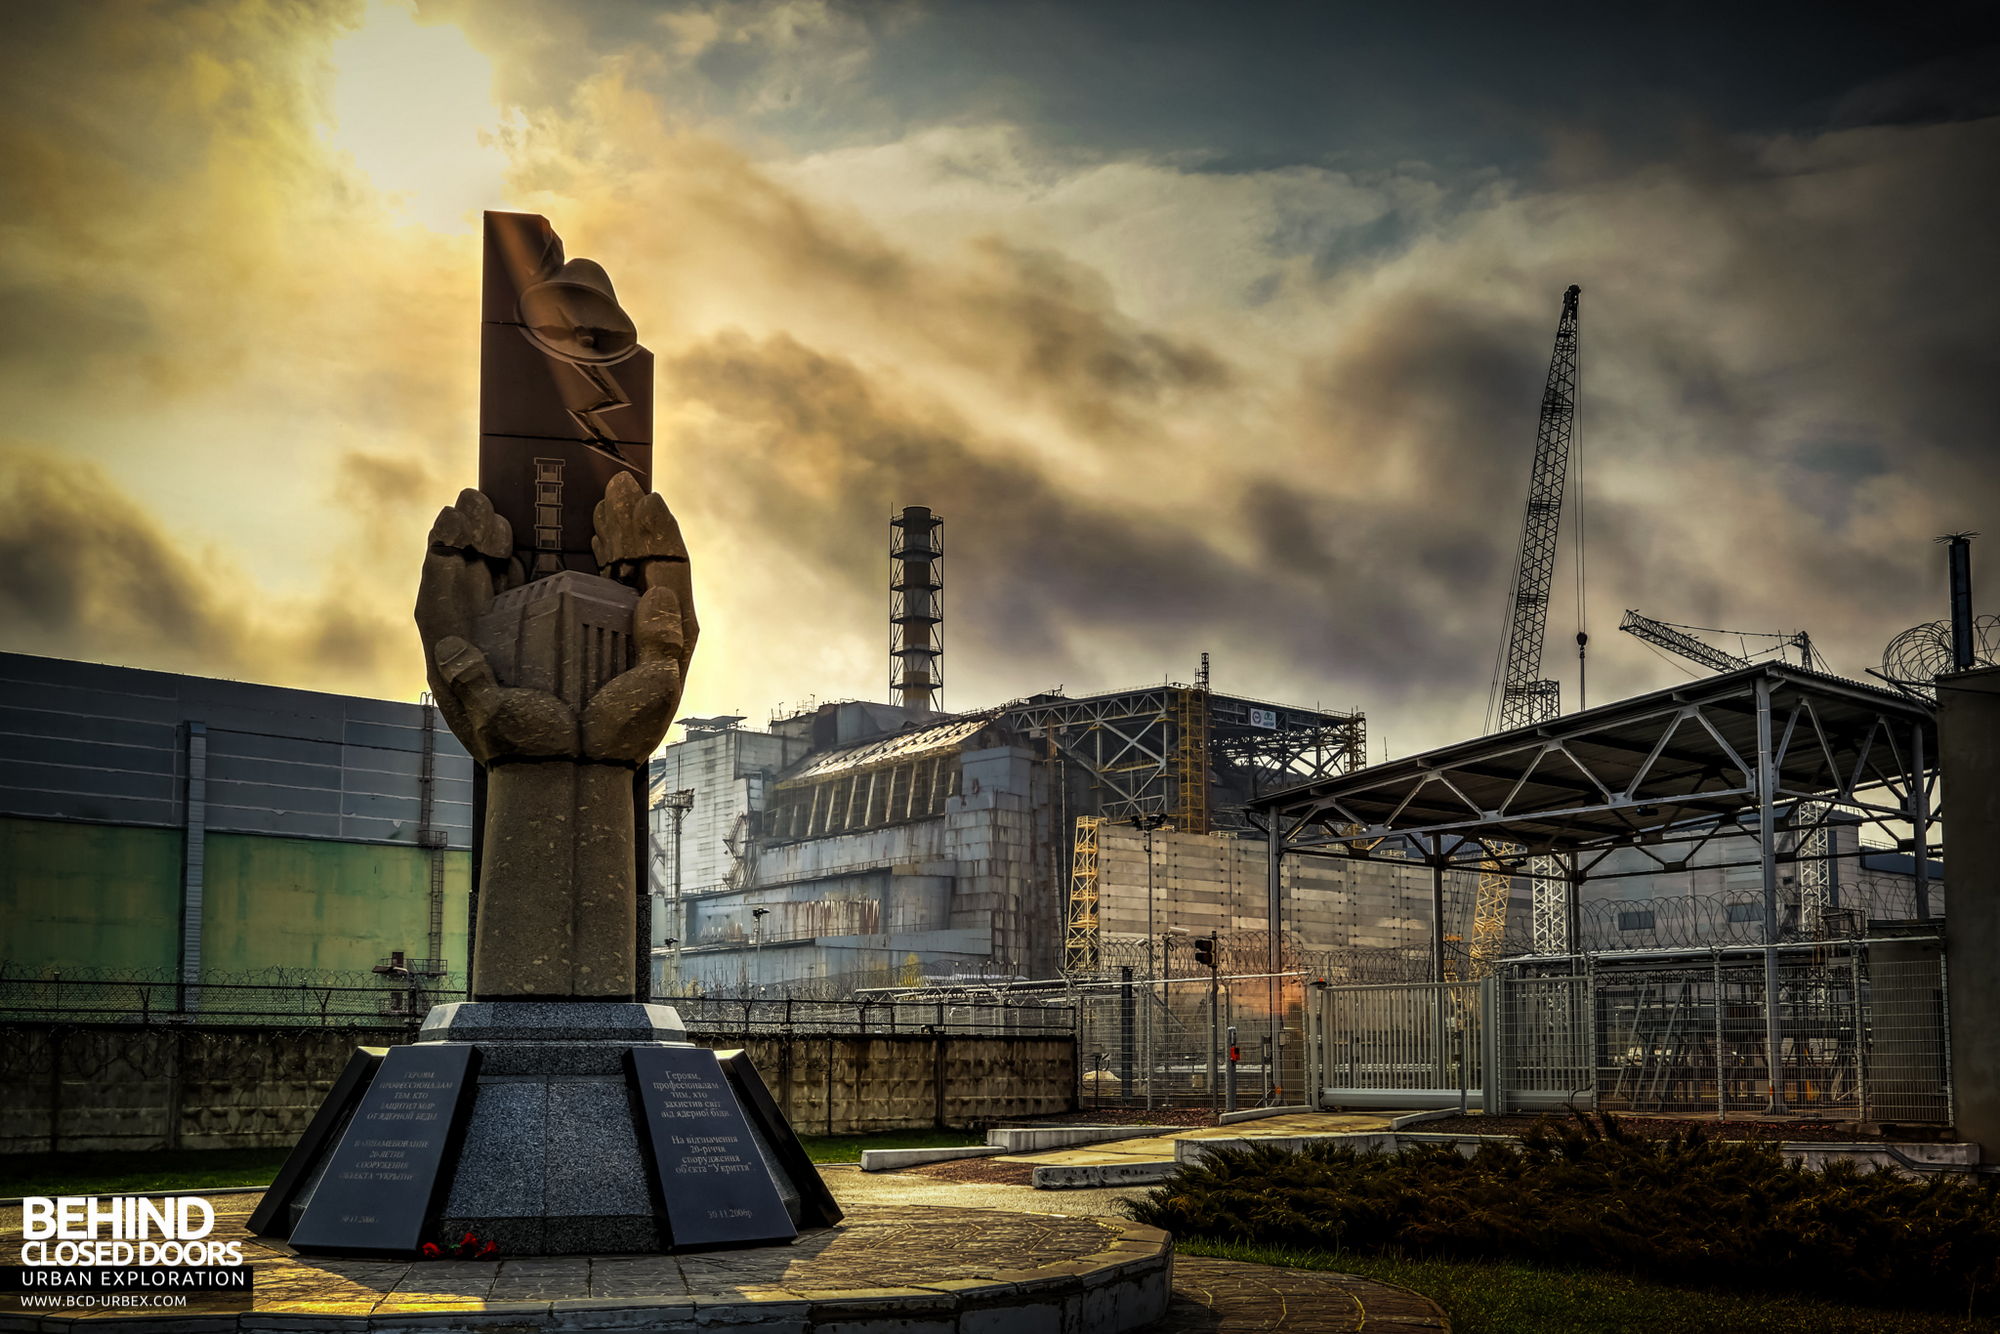 Chernobyl Ukraine Nuclear Power Plant Meltdown